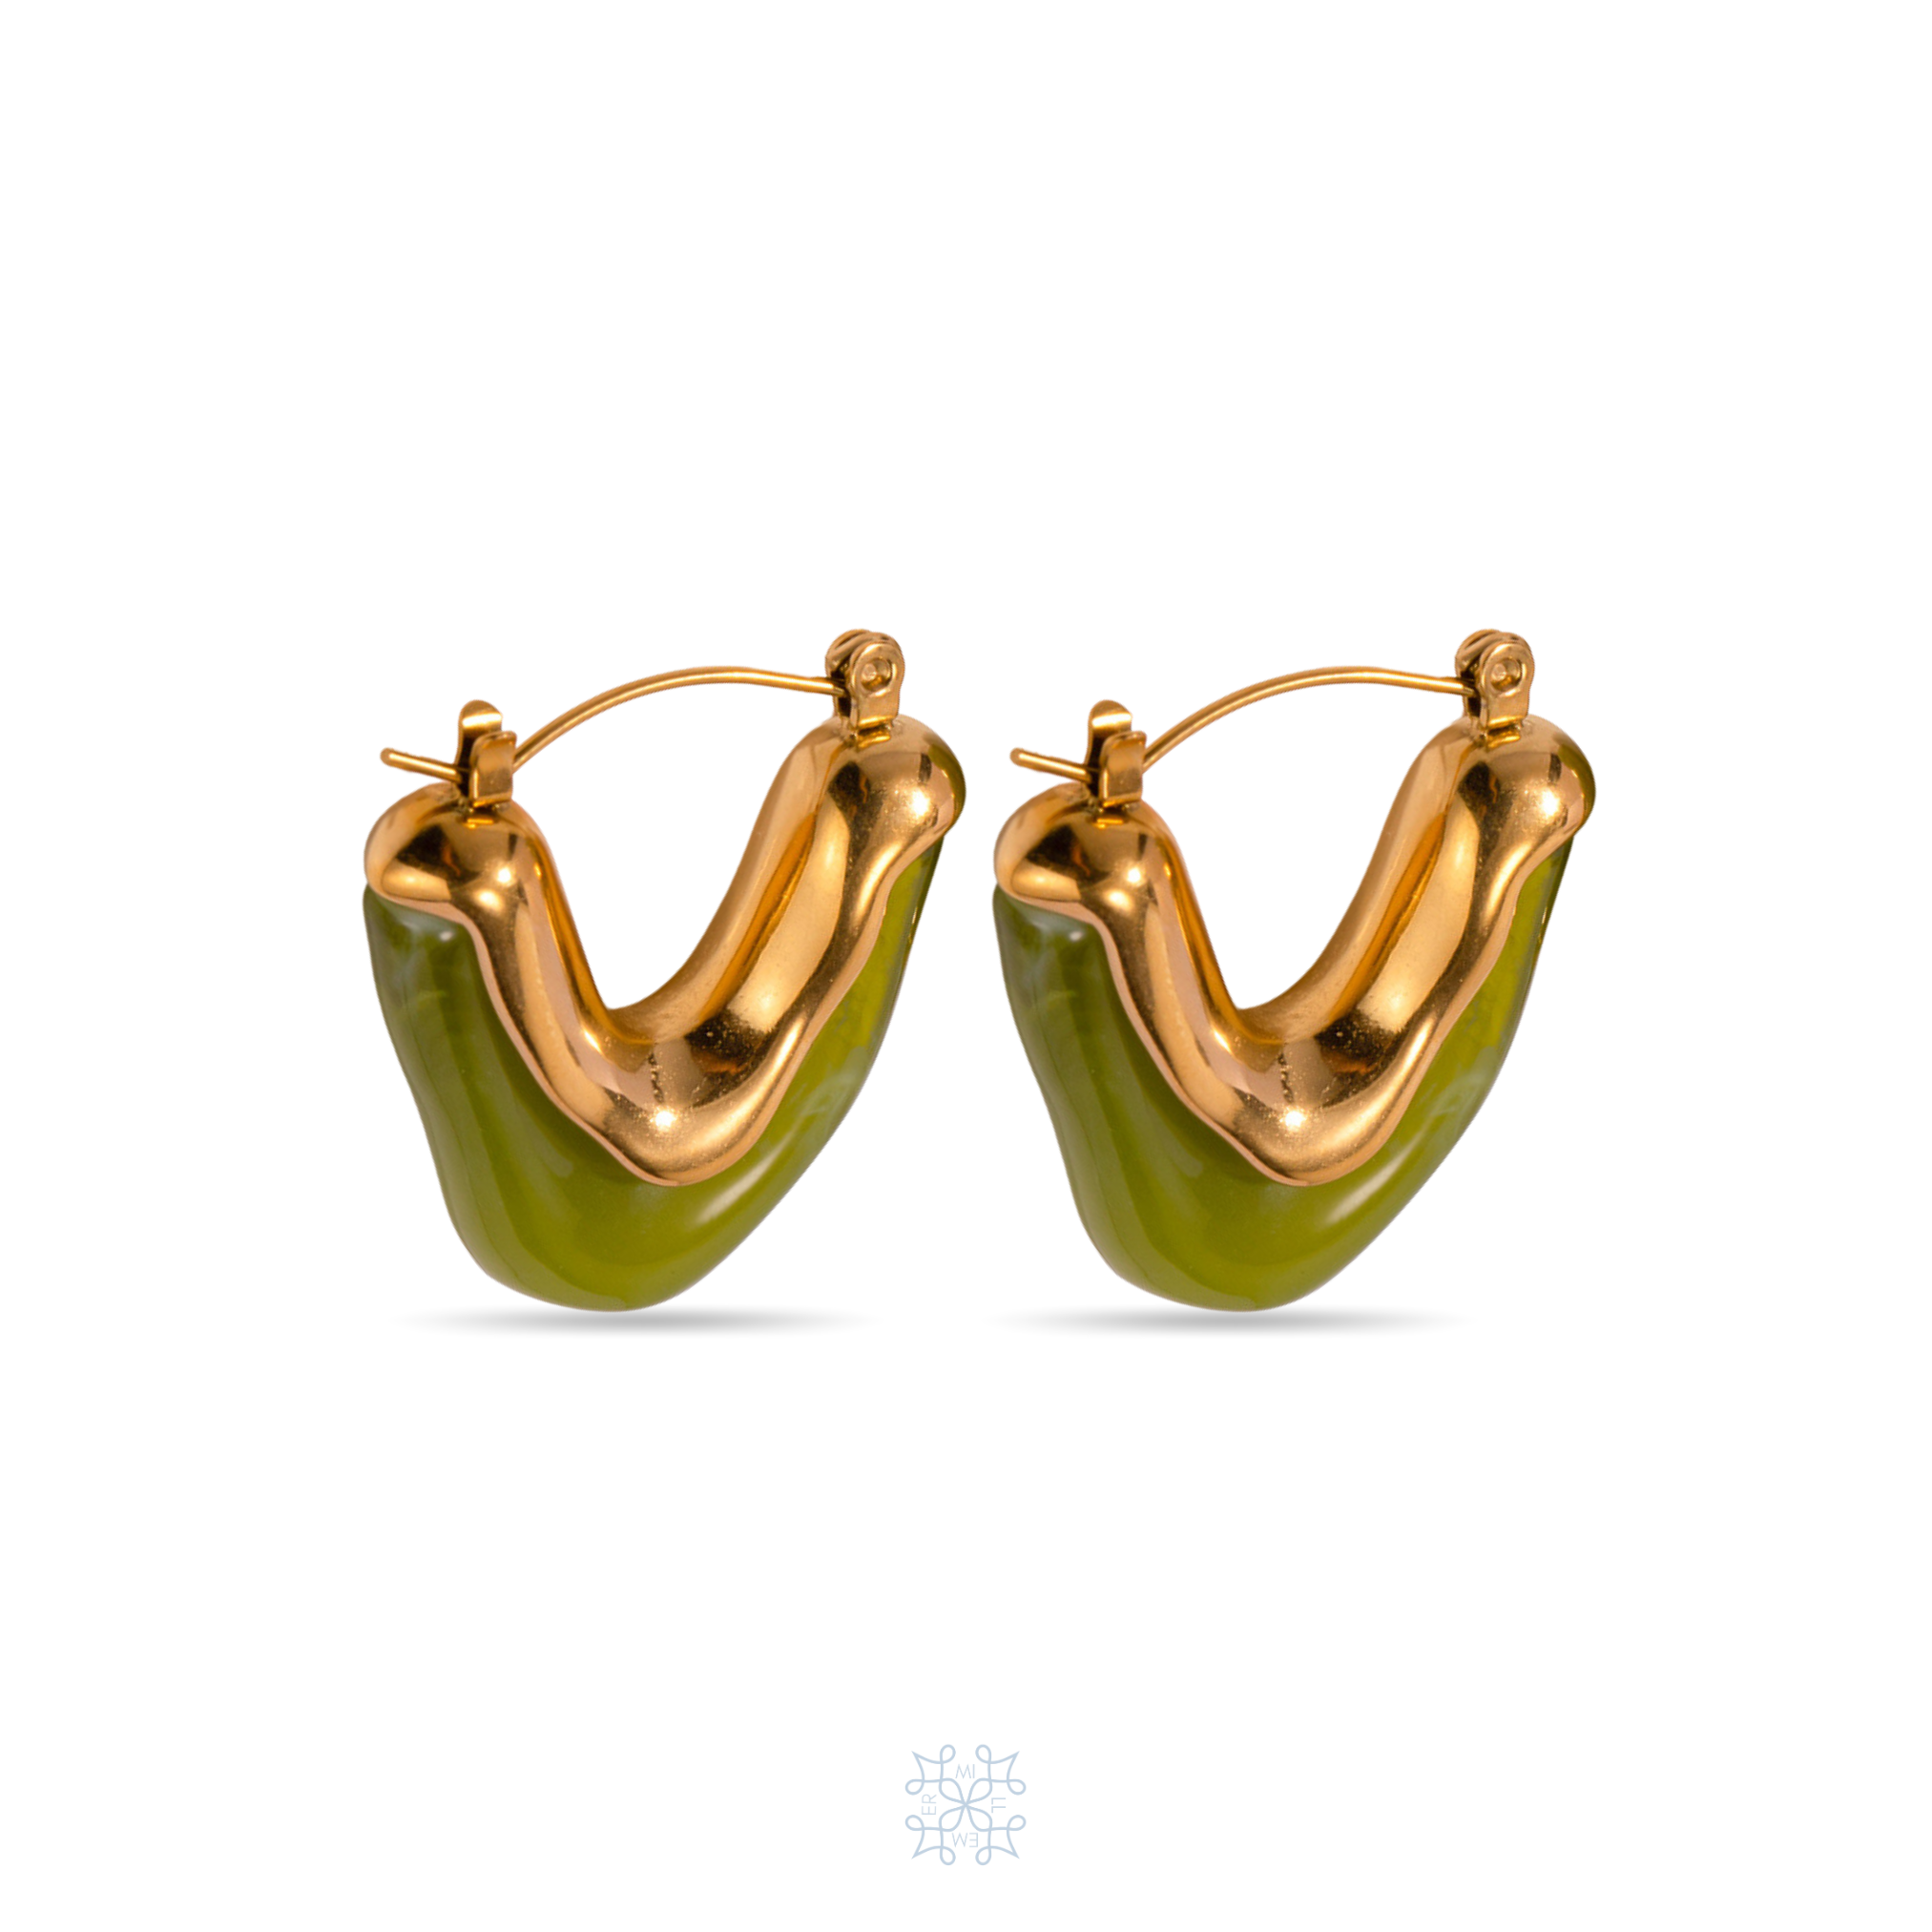 V shape Gold Plated  Hoop Earrings made with Green Acrylic. Waterproof Earrings.